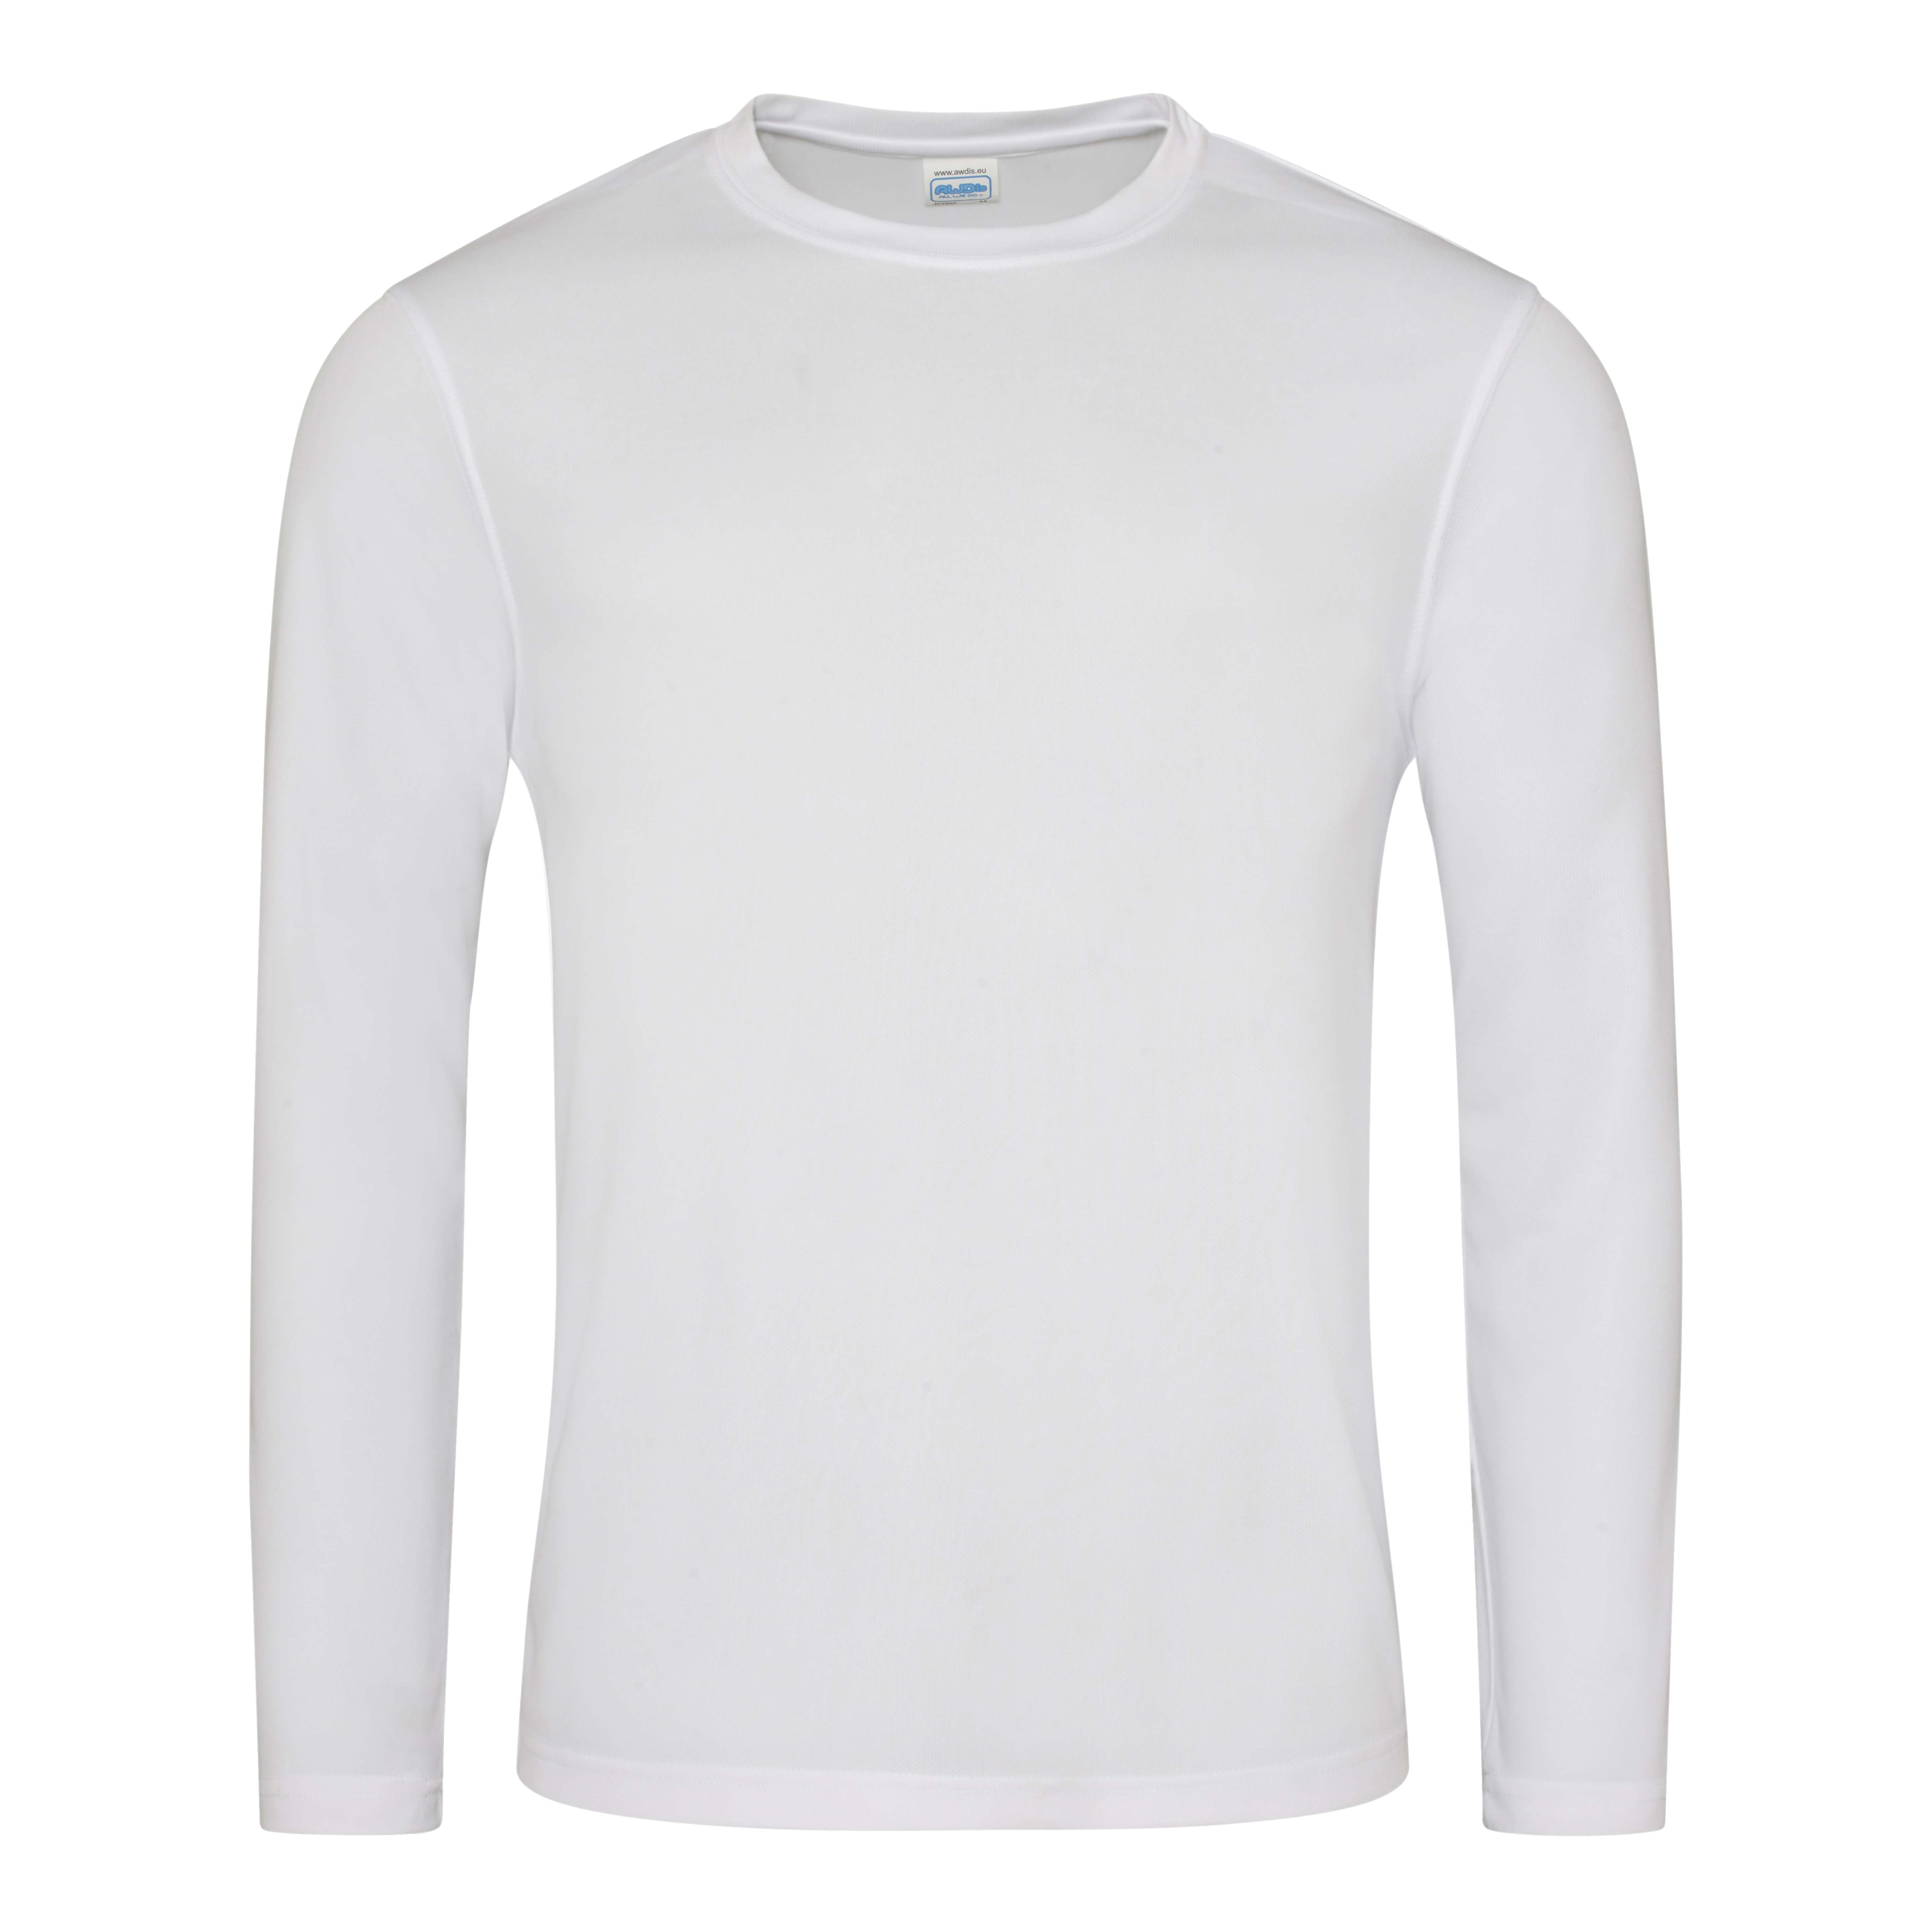 SMU Limited Long Sleeves Shirt 3D Effect Black-White 32443 B